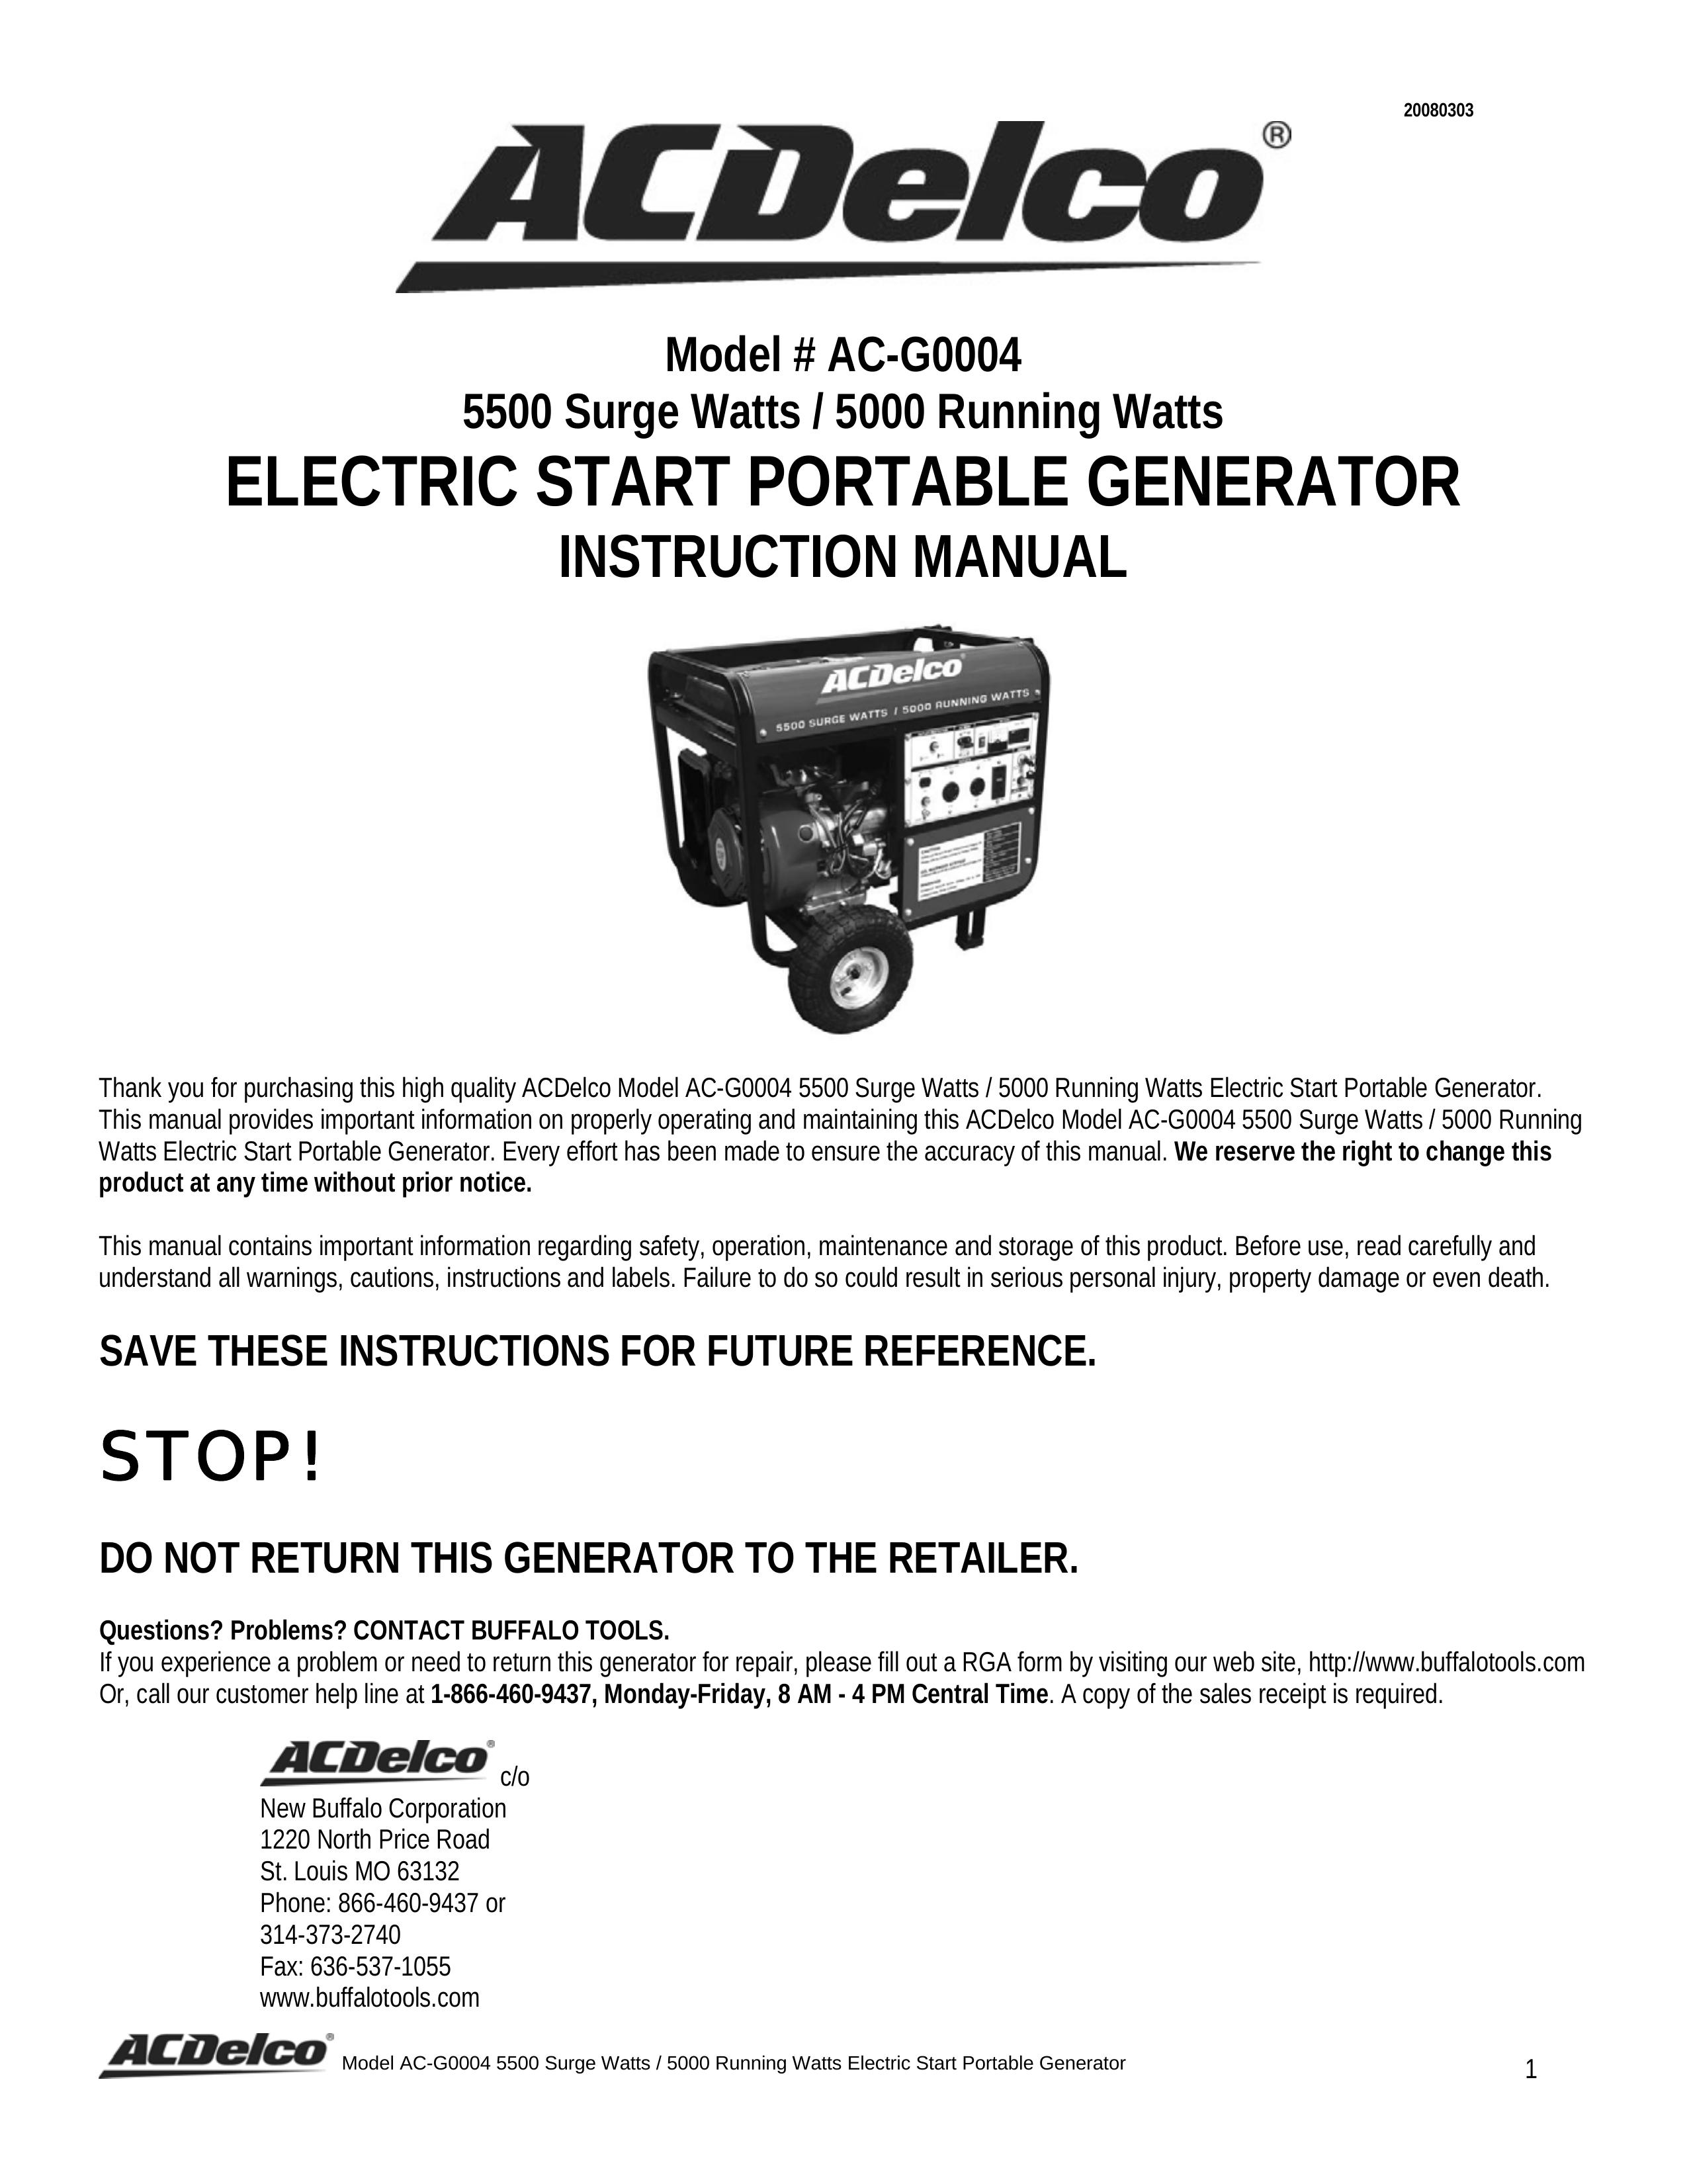 ACDelco AC-G0004 Portable Generator User Manual